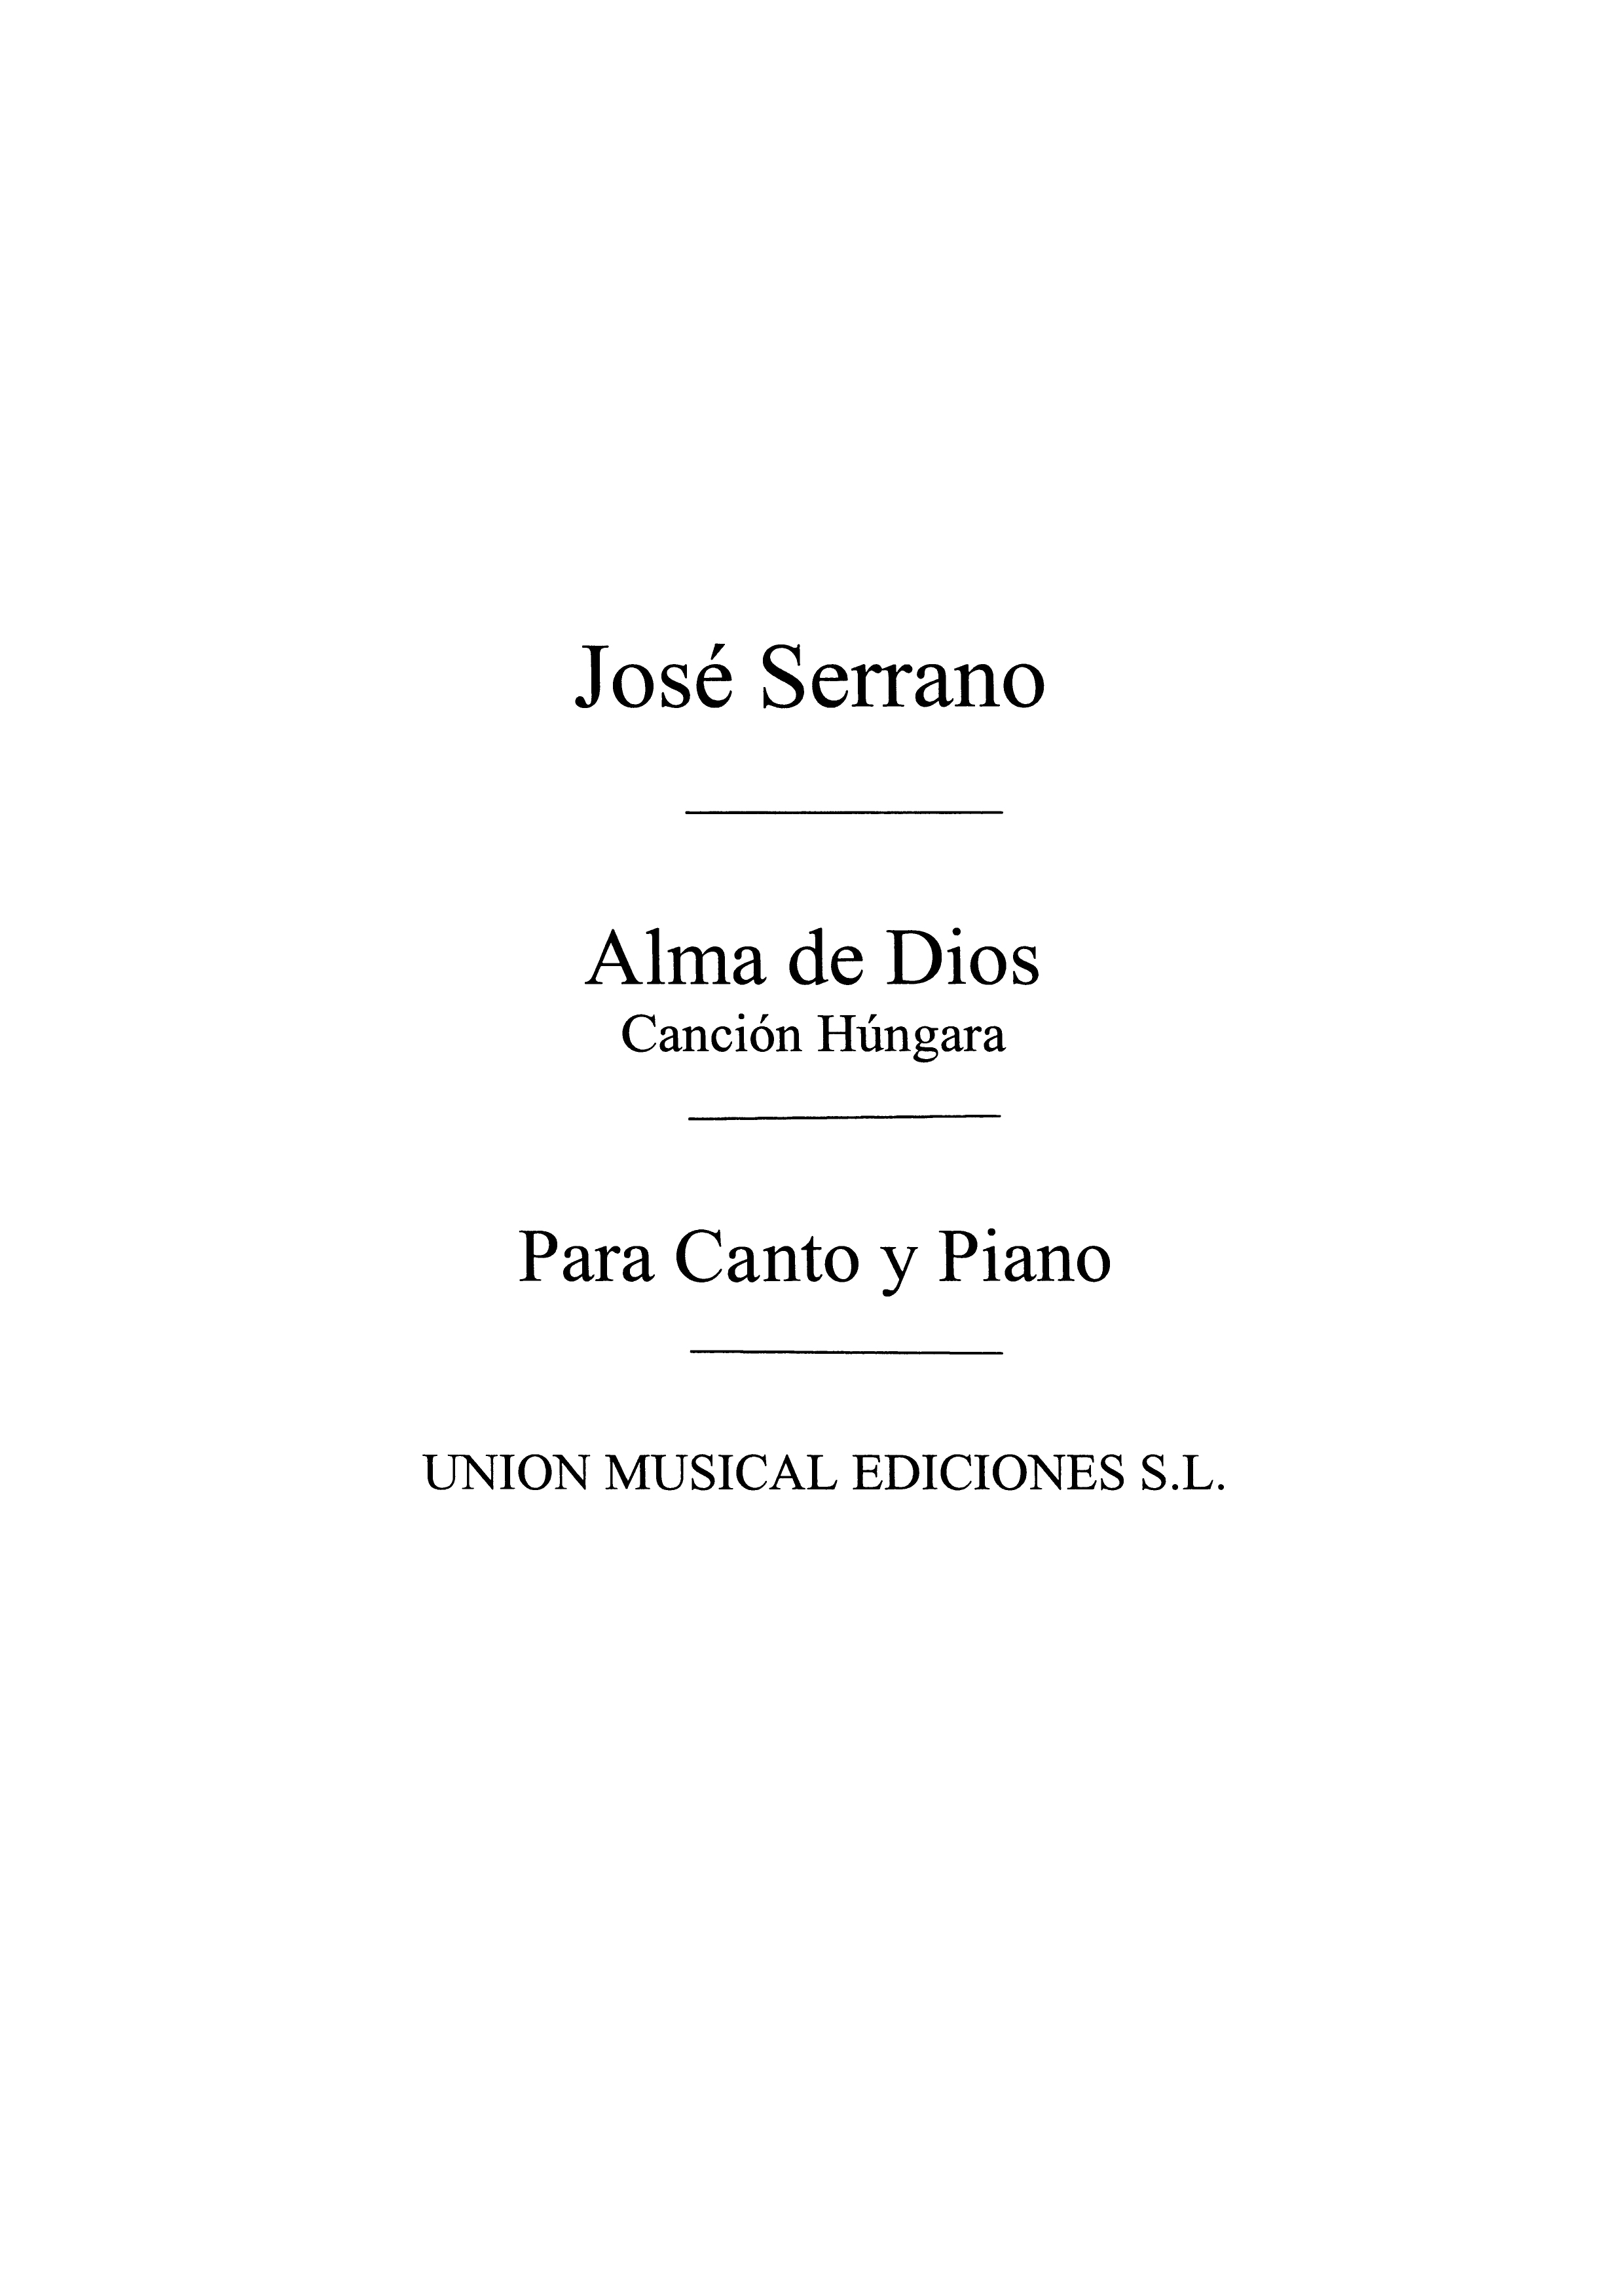 Jose Serrano: Cancion Hungara No.5 De Alma De Dios: Opera: Instrumental Work